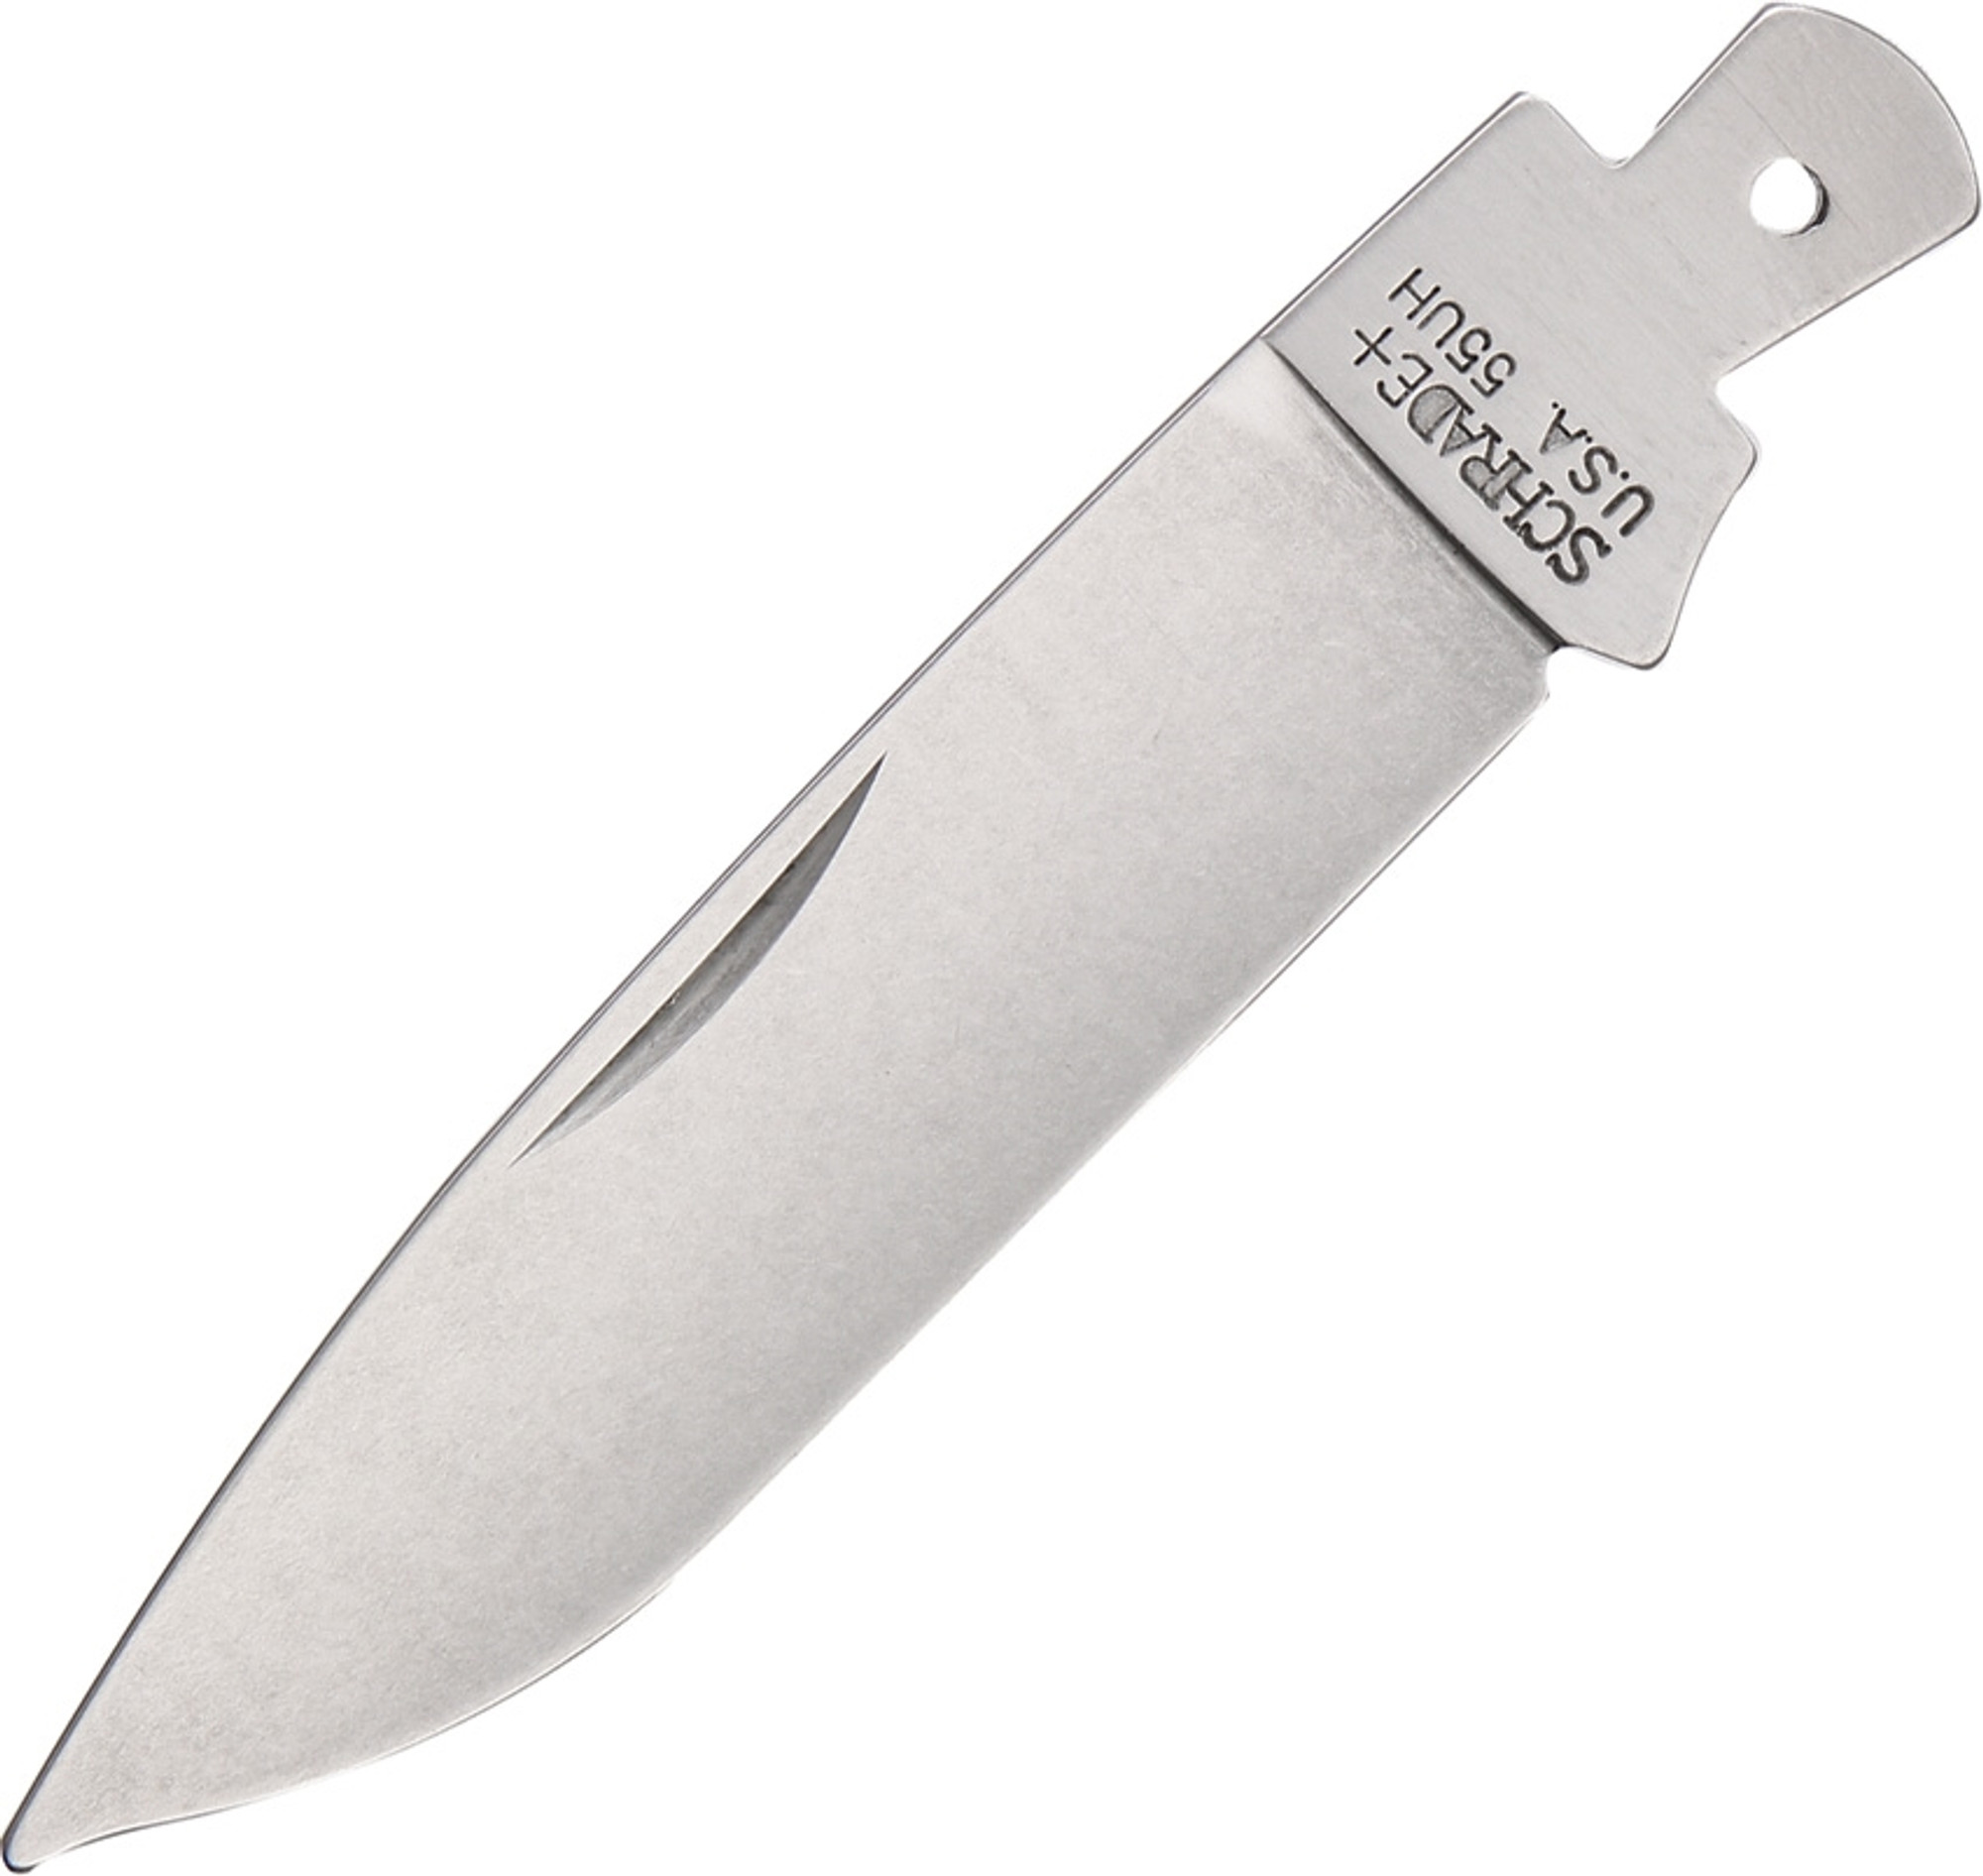 Folding Knife Blade 55UH S467